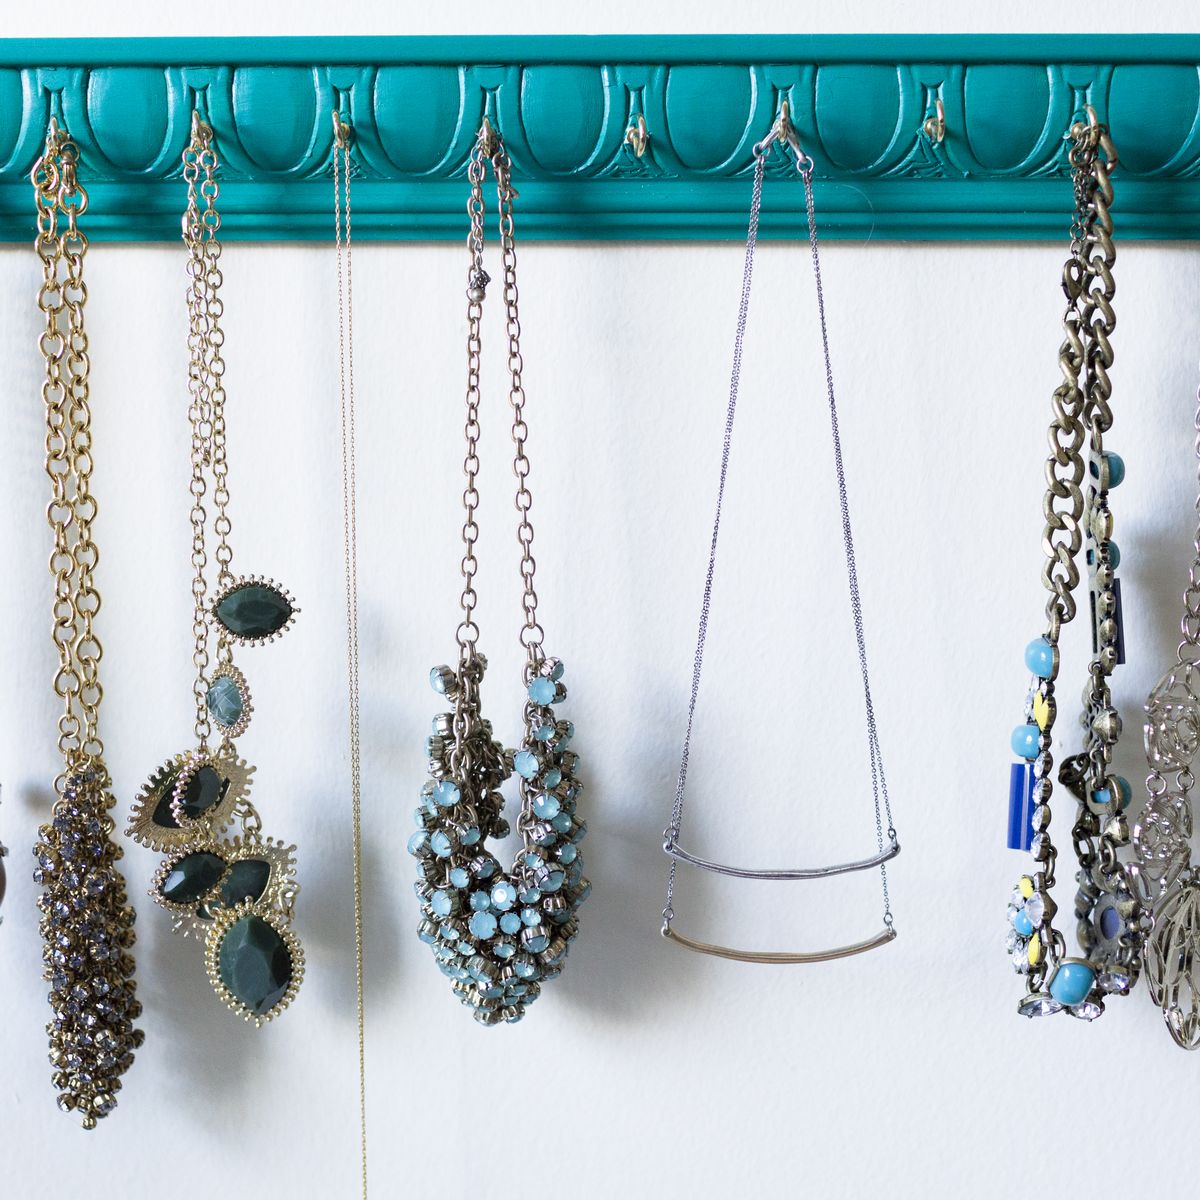 DIY Jewelry Organizer (Storage Ideas) - Artsy Chicks Rule®